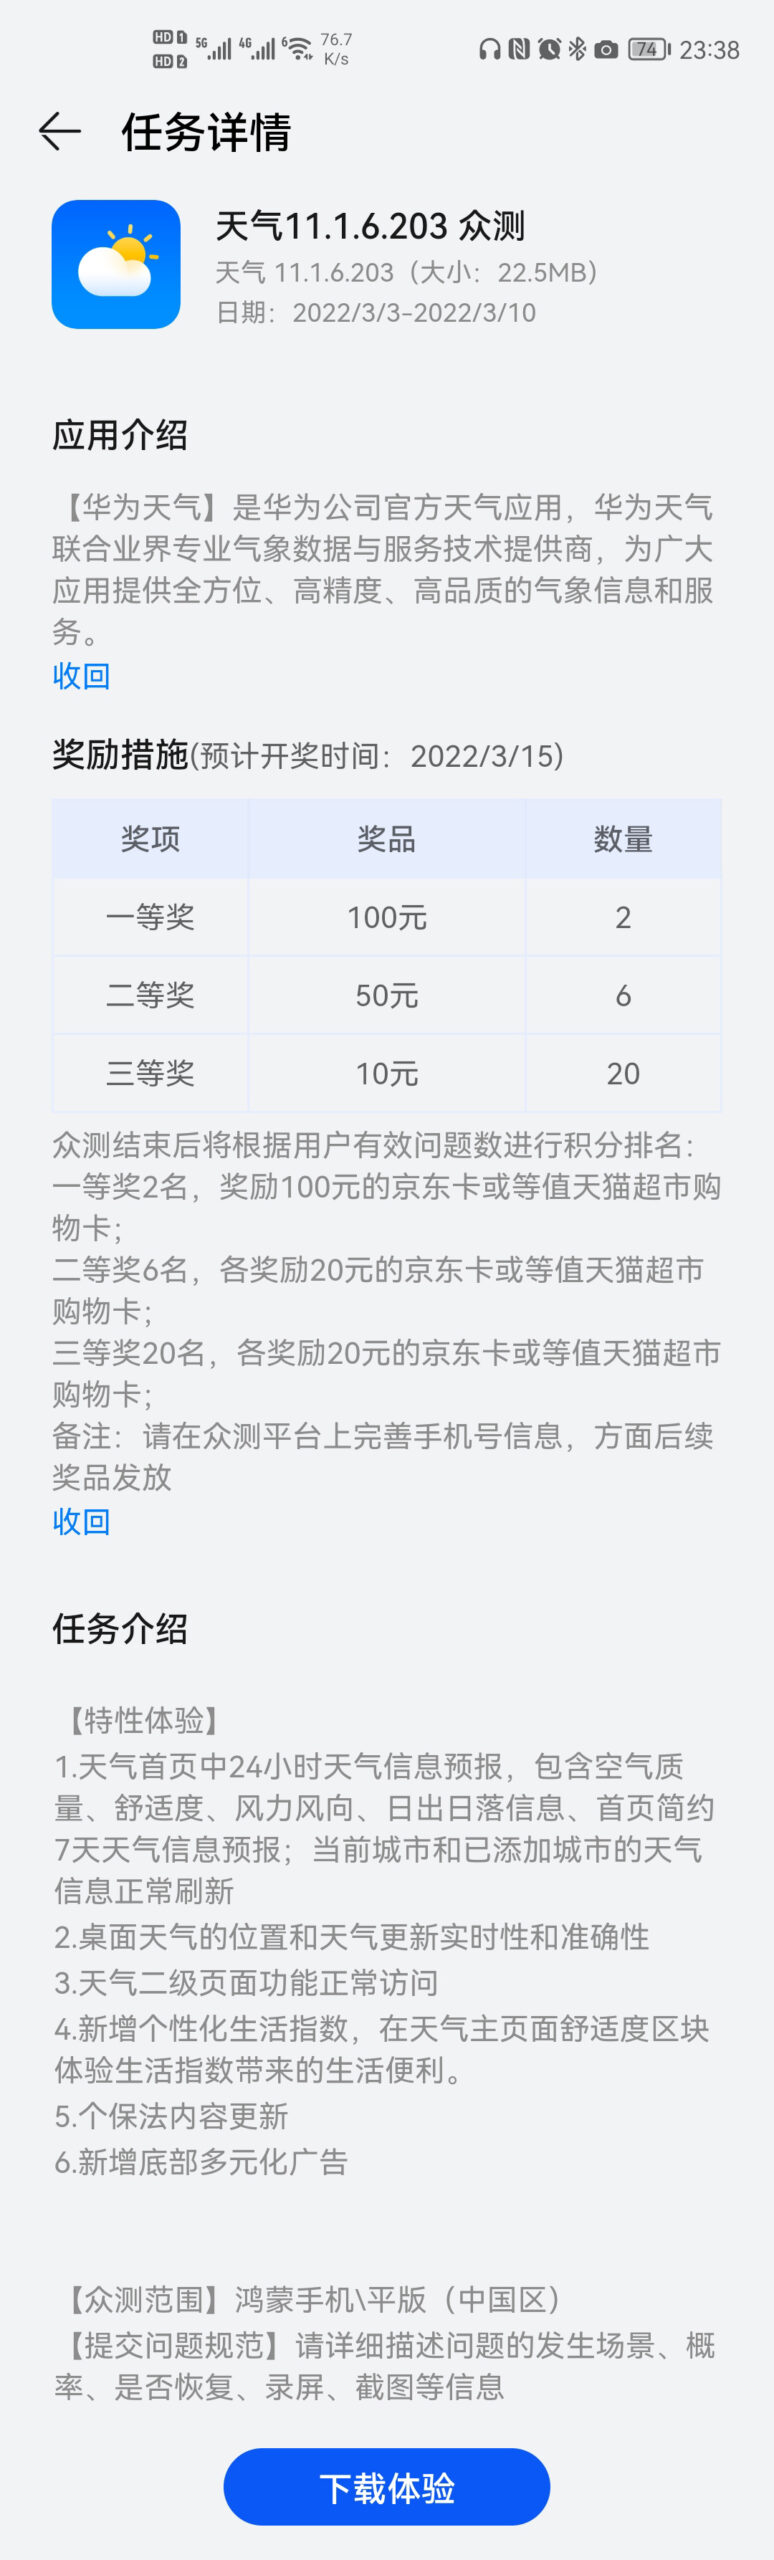 Huawei Weather App 11.1.6.203 Changelog